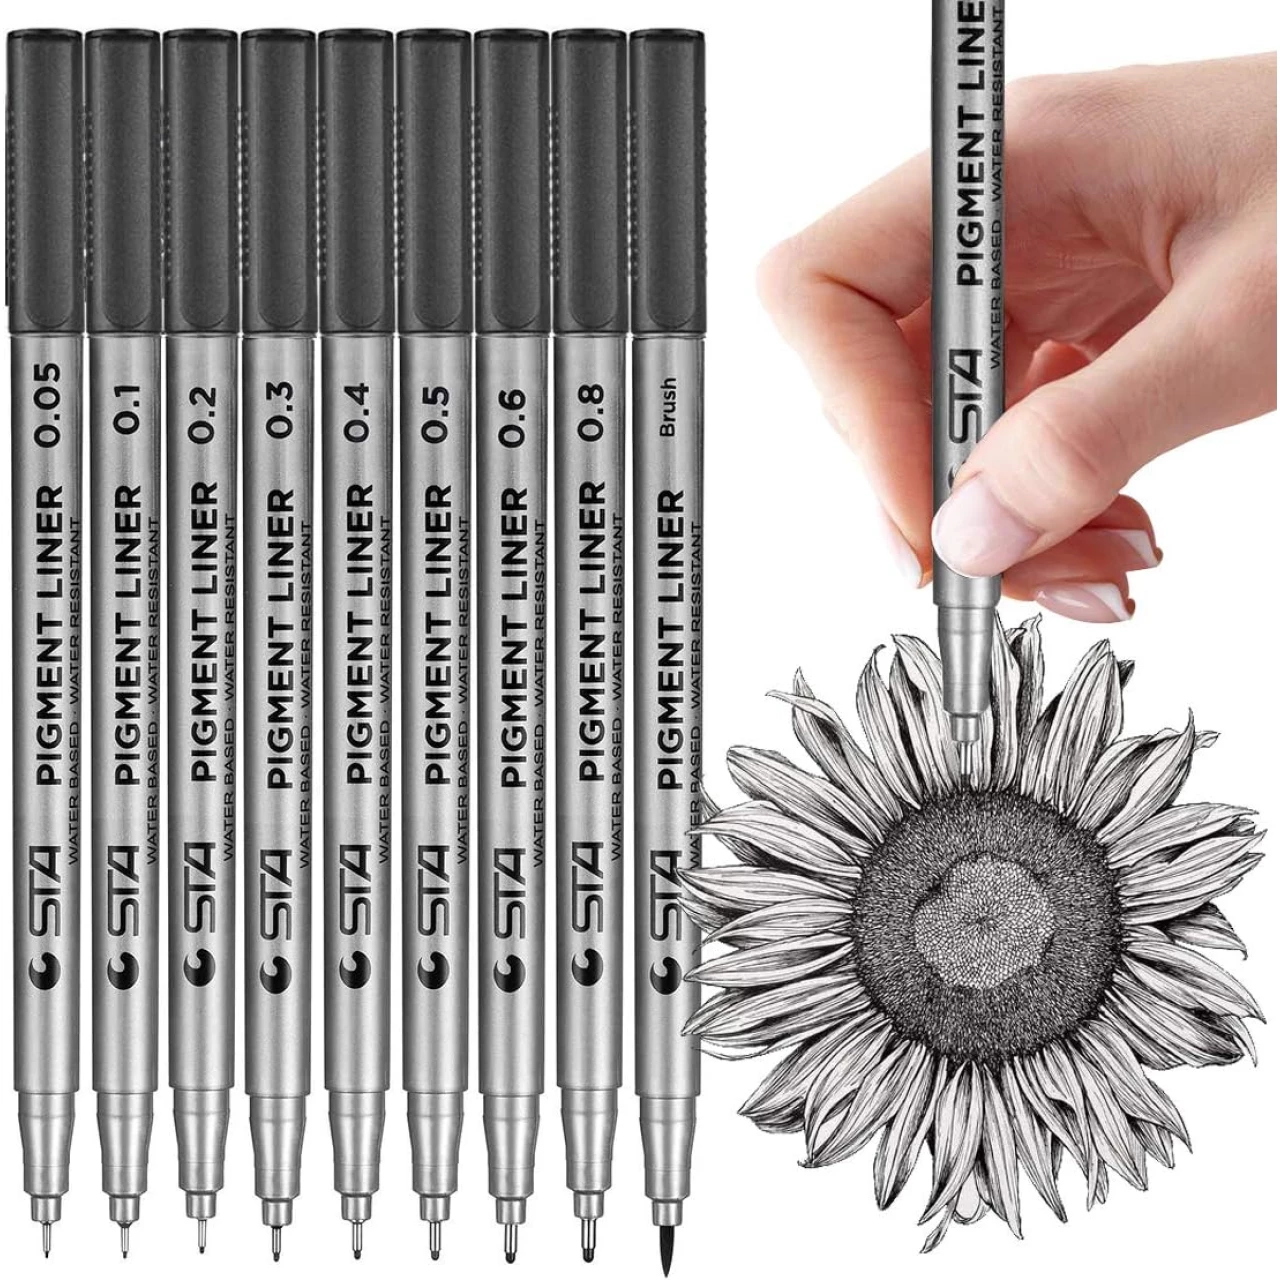 MISULOVE Black Micro-Pen Fineliner Ink Pens